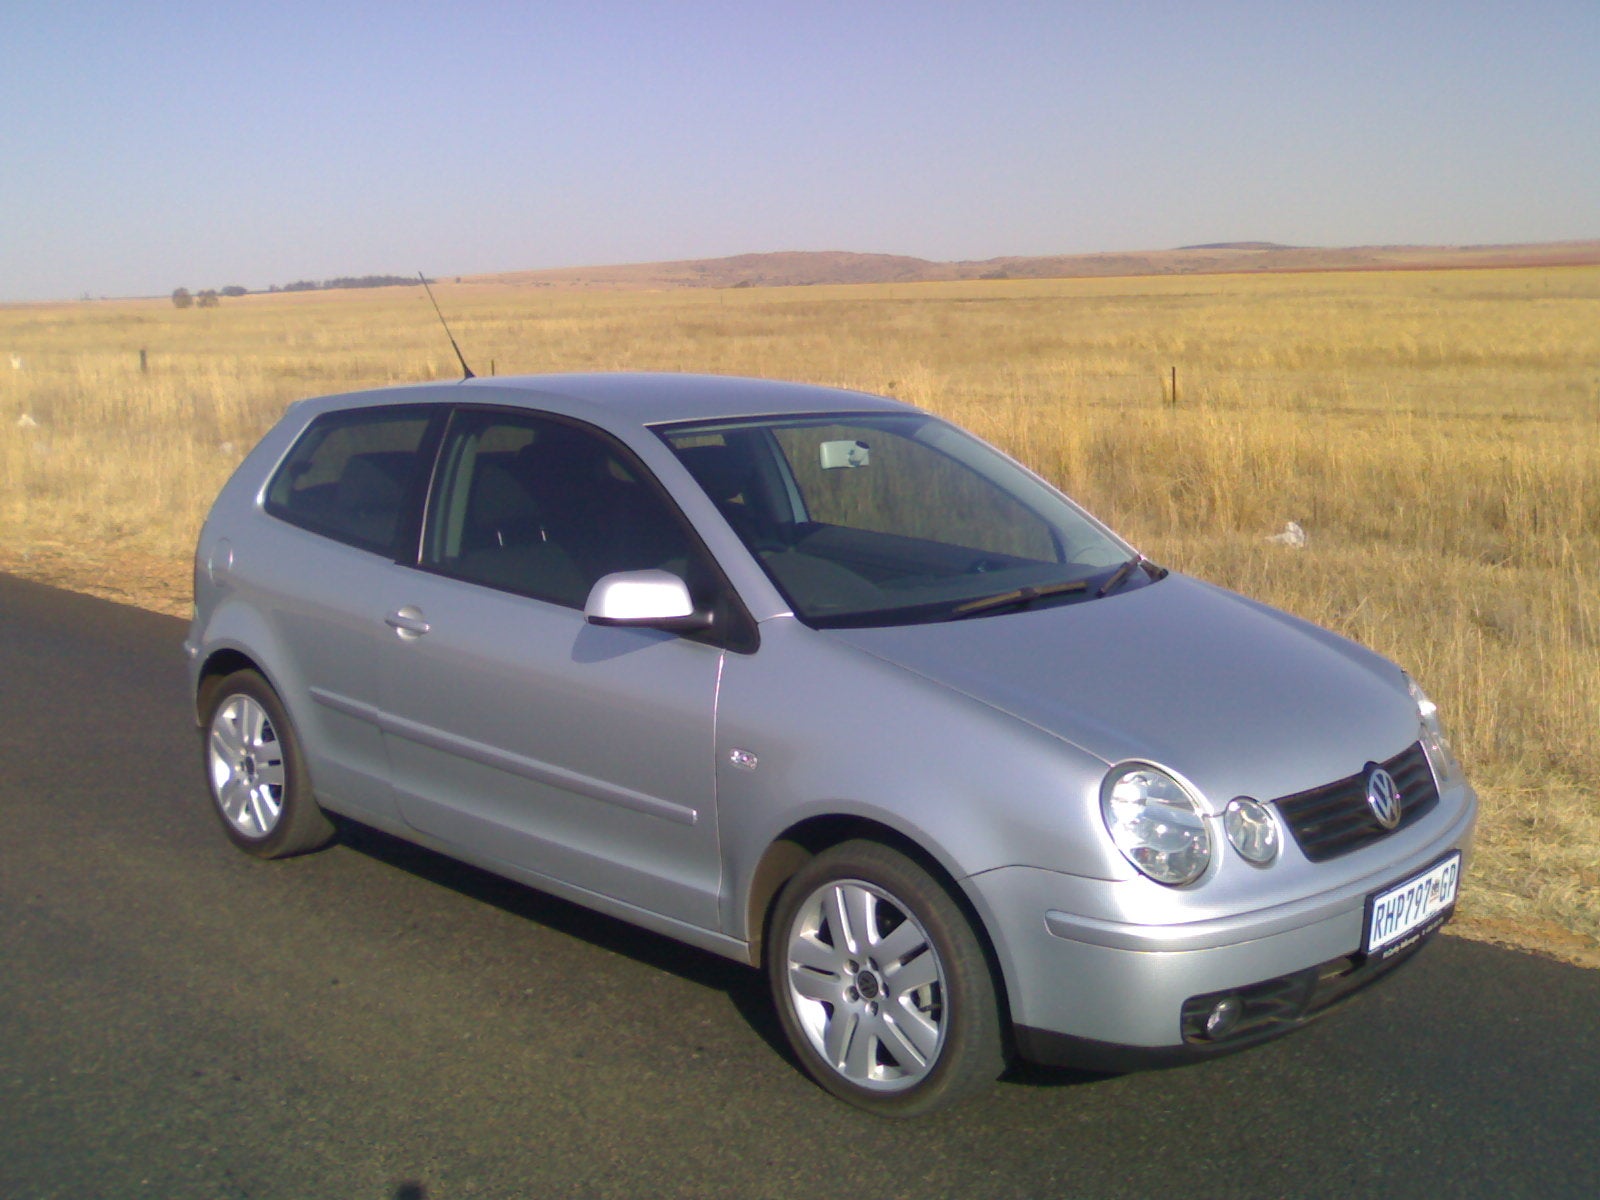 2004 Volkswagen Polo Exterior Pictures CarGurus